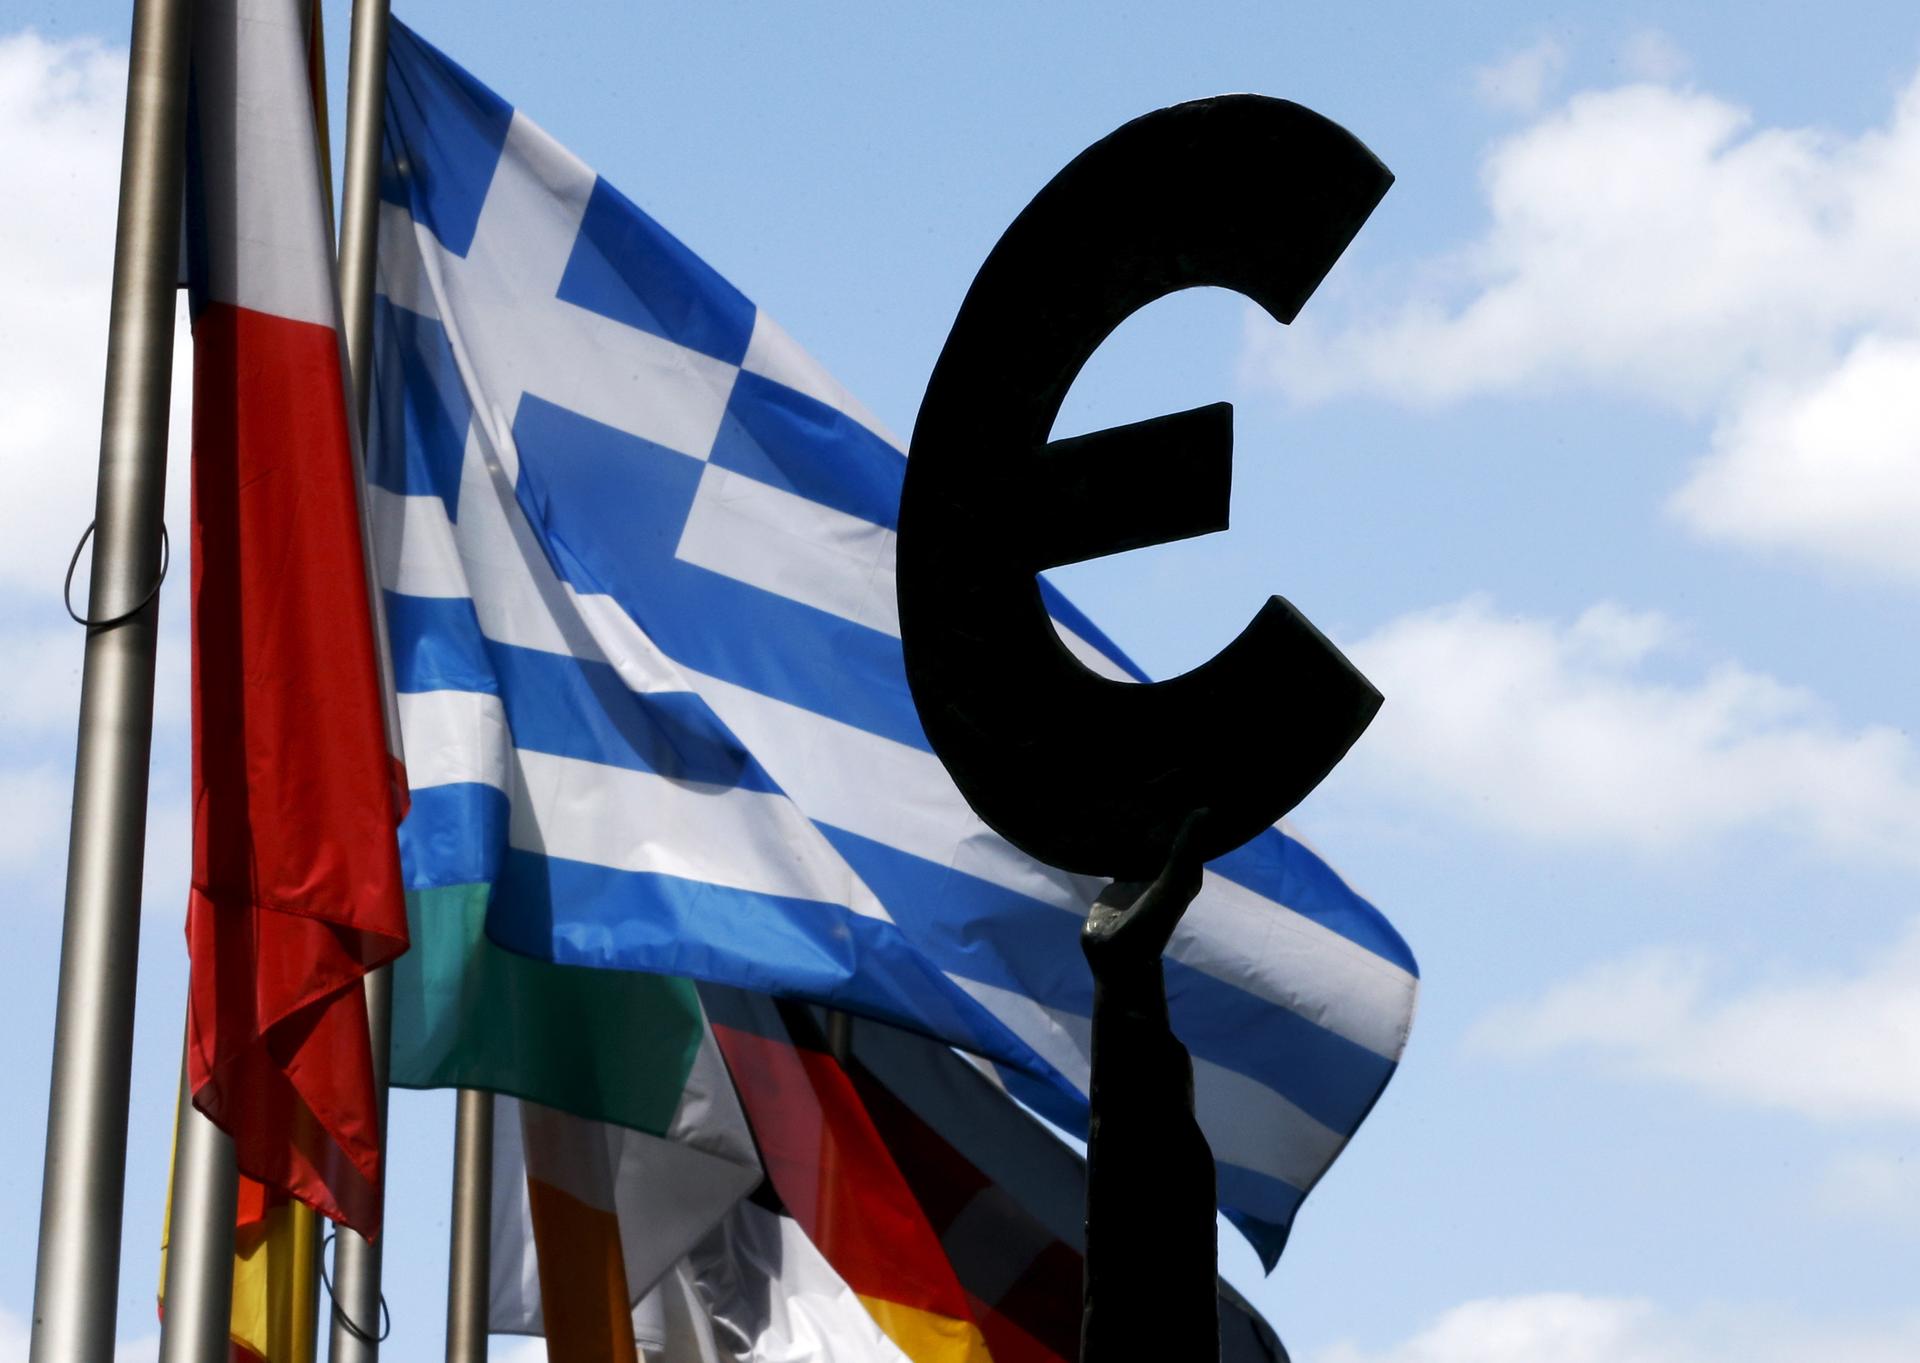 A euro symbol alongside a Greek flag